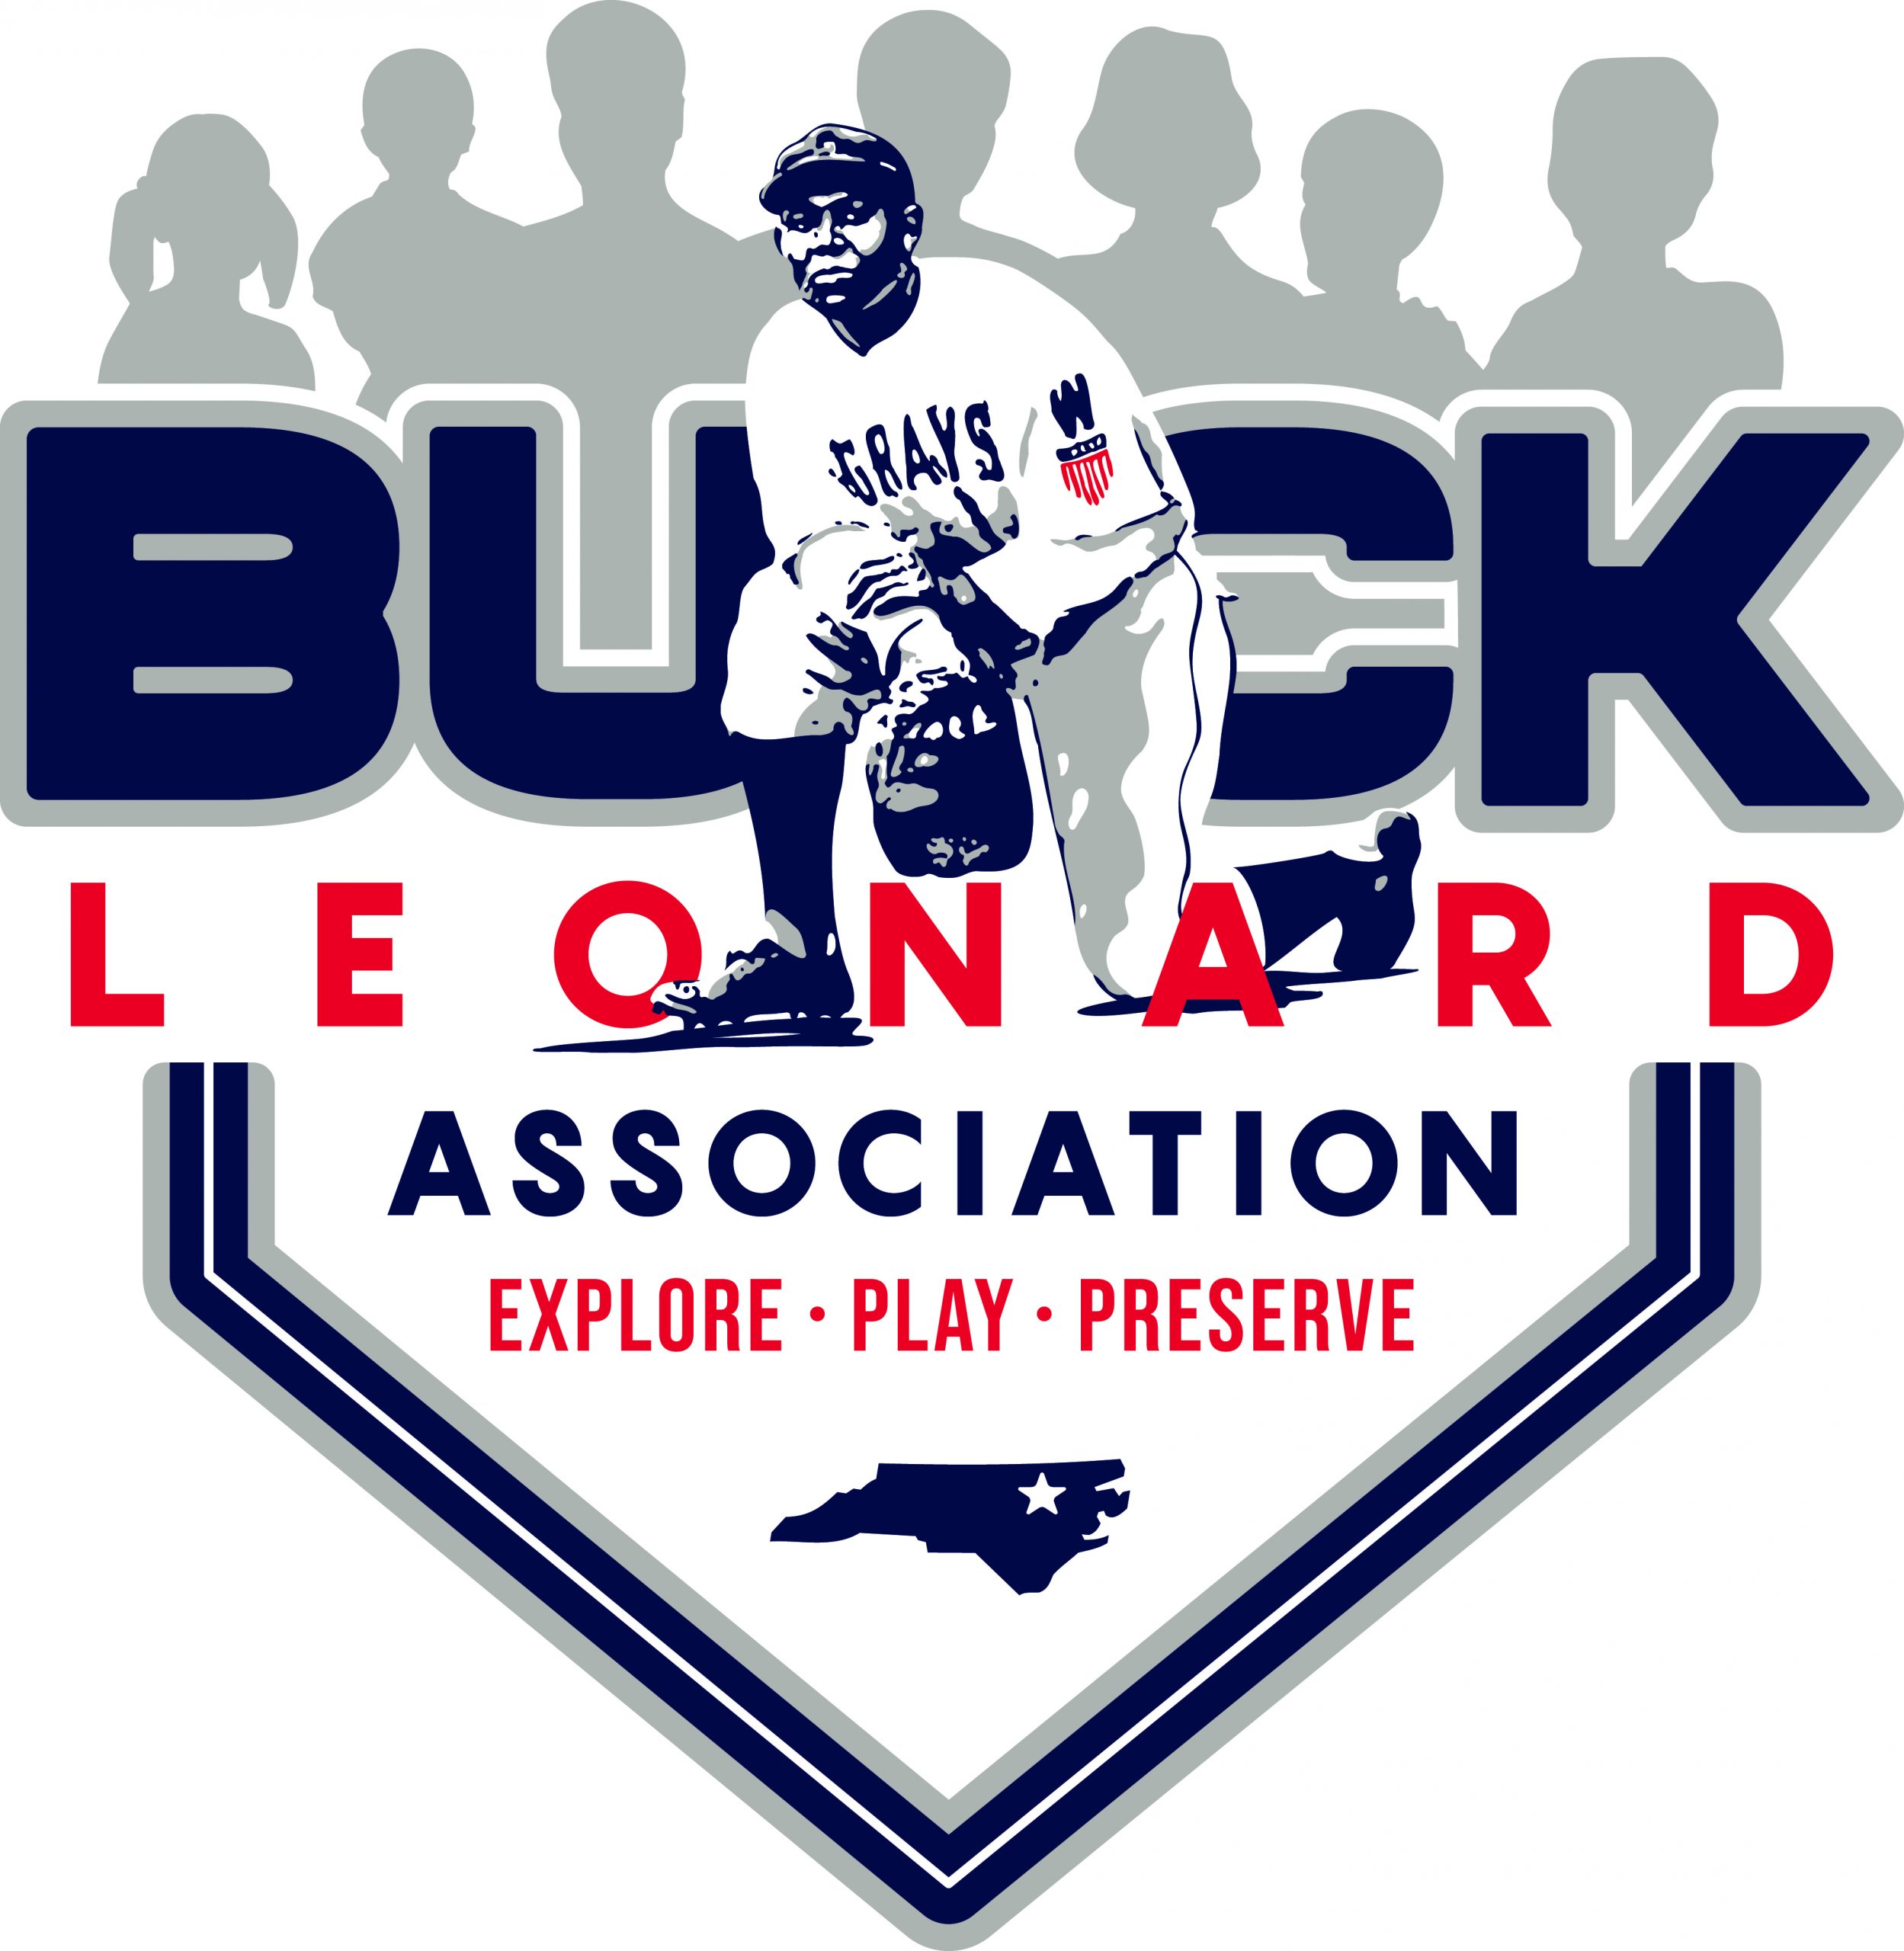 Buck Leonard Association for Sports and Human Enrichment